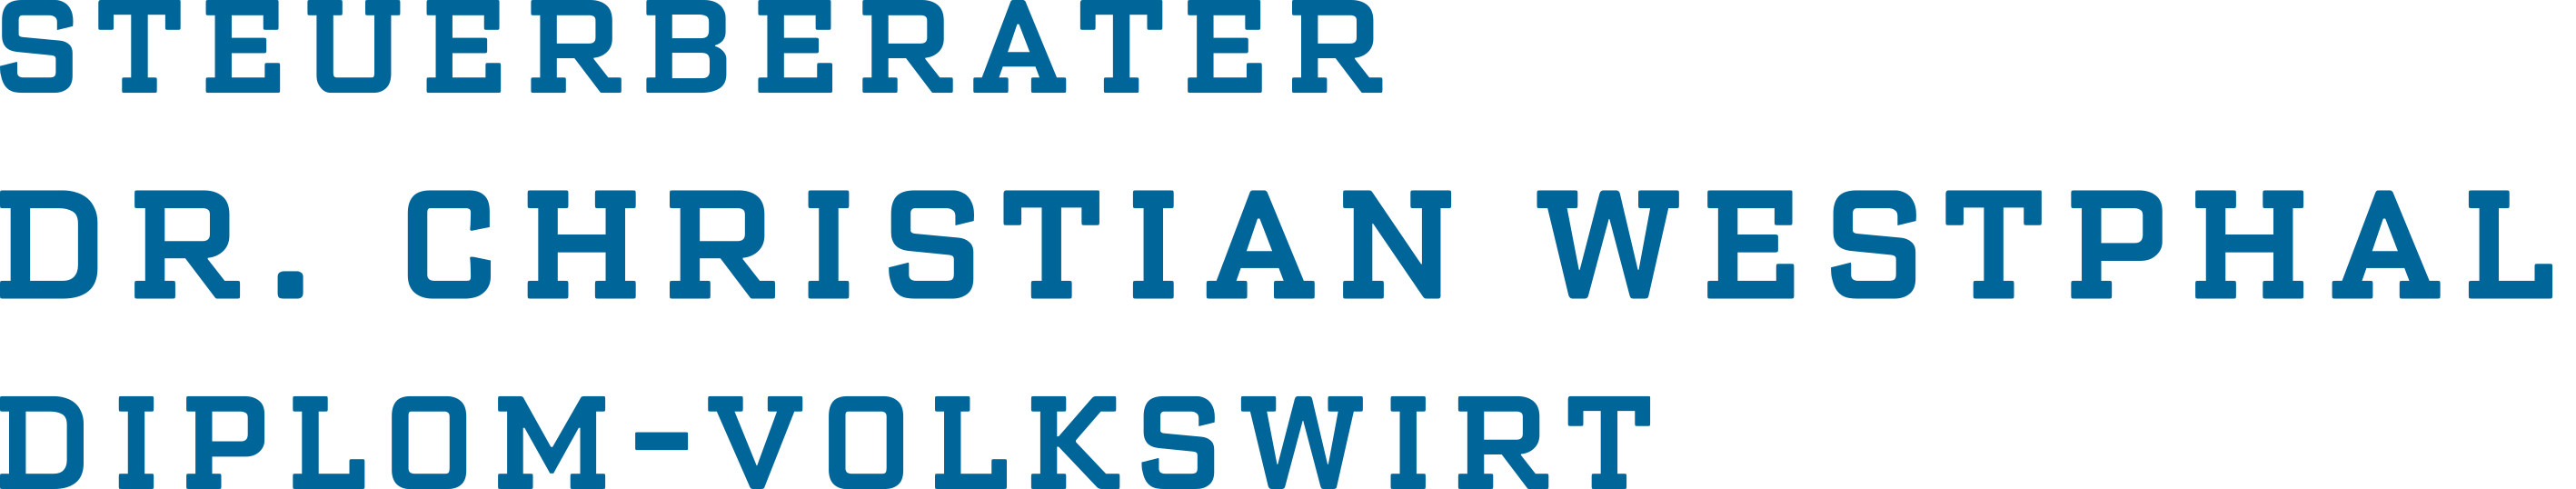 Steuerberater Dr. Christian Westphal logo